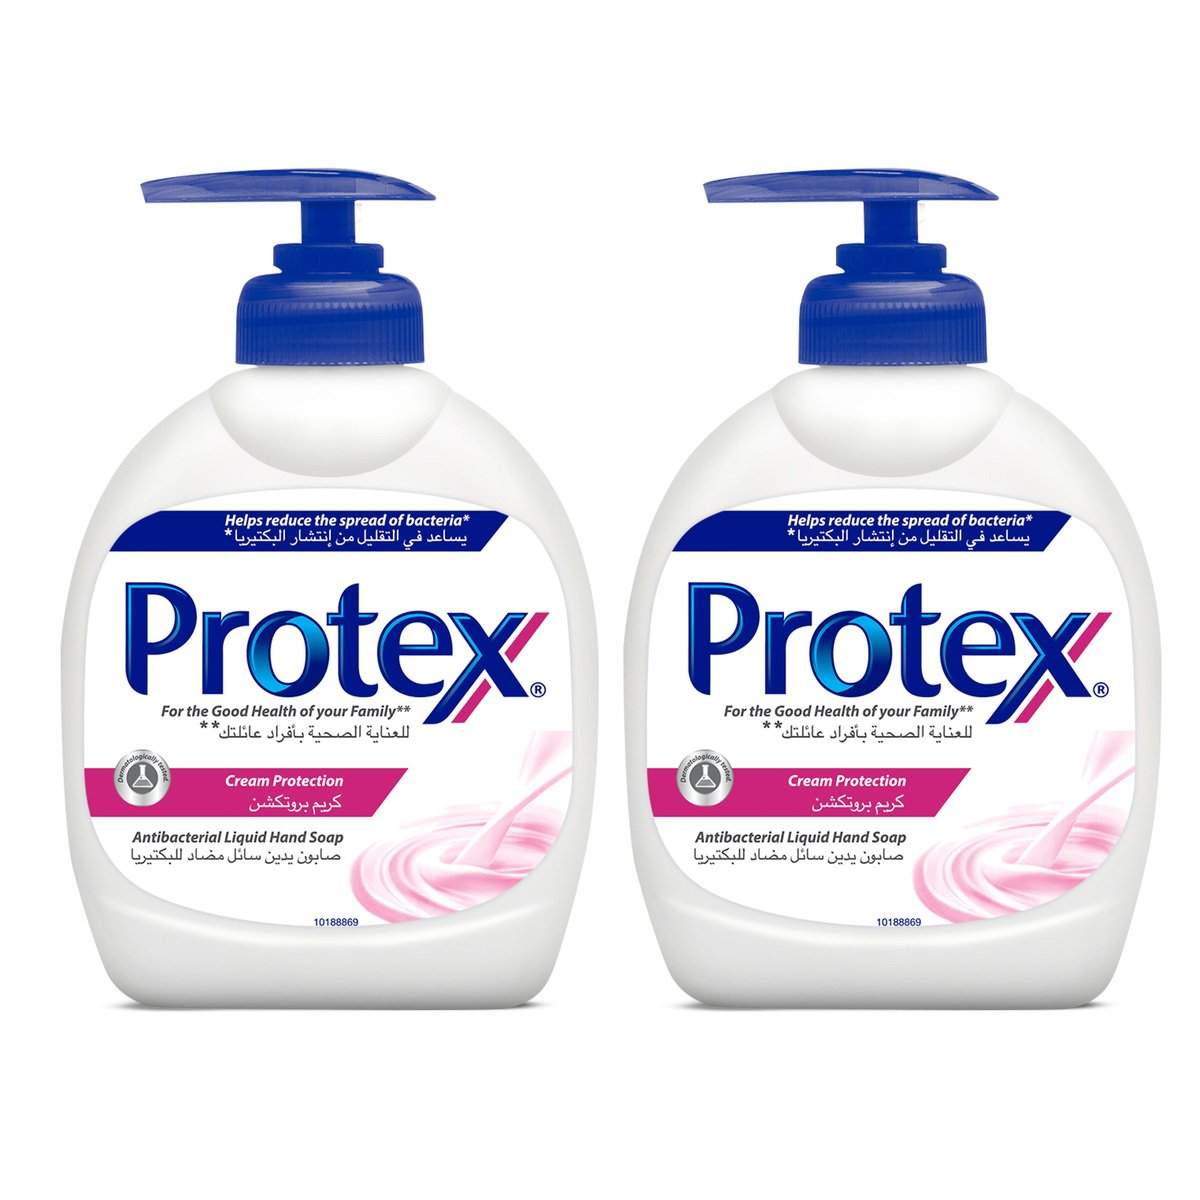 Protex Anti-Bacterial Liquid Hand Soap Cream Protection 2 x 300 ml